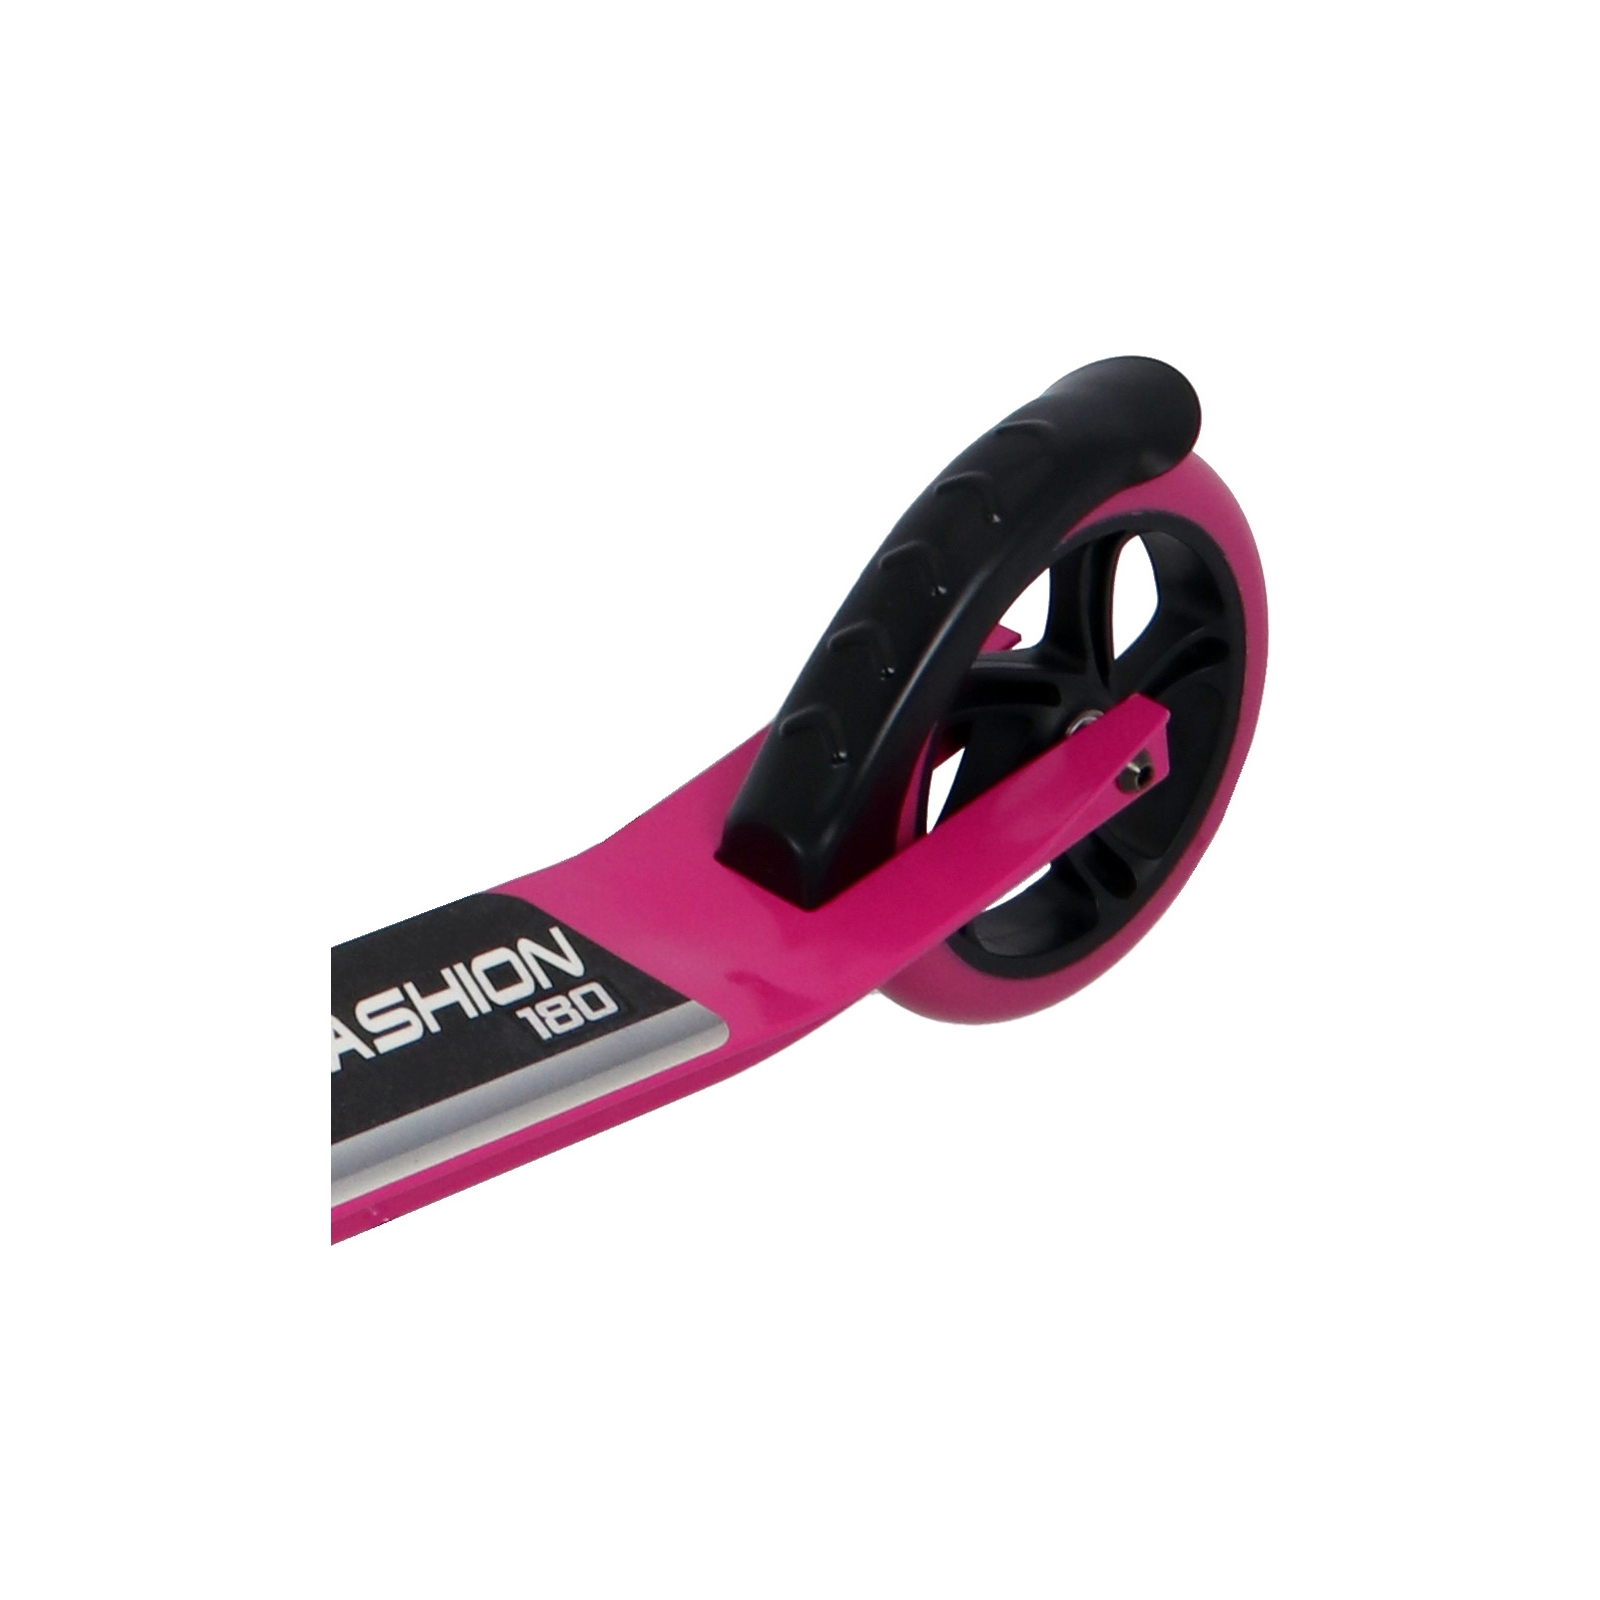 Самокат Nixor sports серии Pro-fashion 180 розовый (NA01081-P) изображение 4